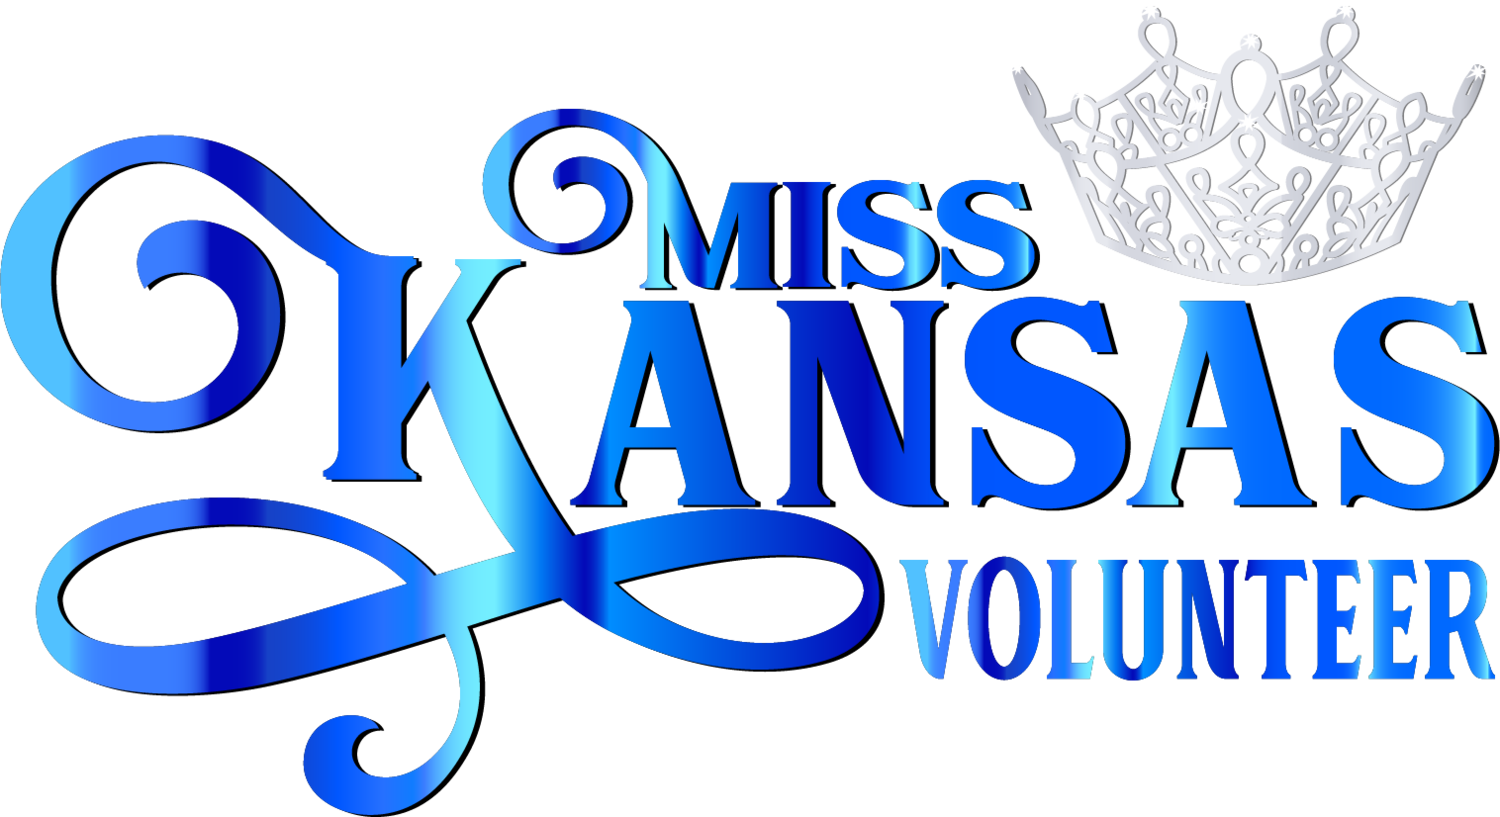 Miss Kansas Volunteer